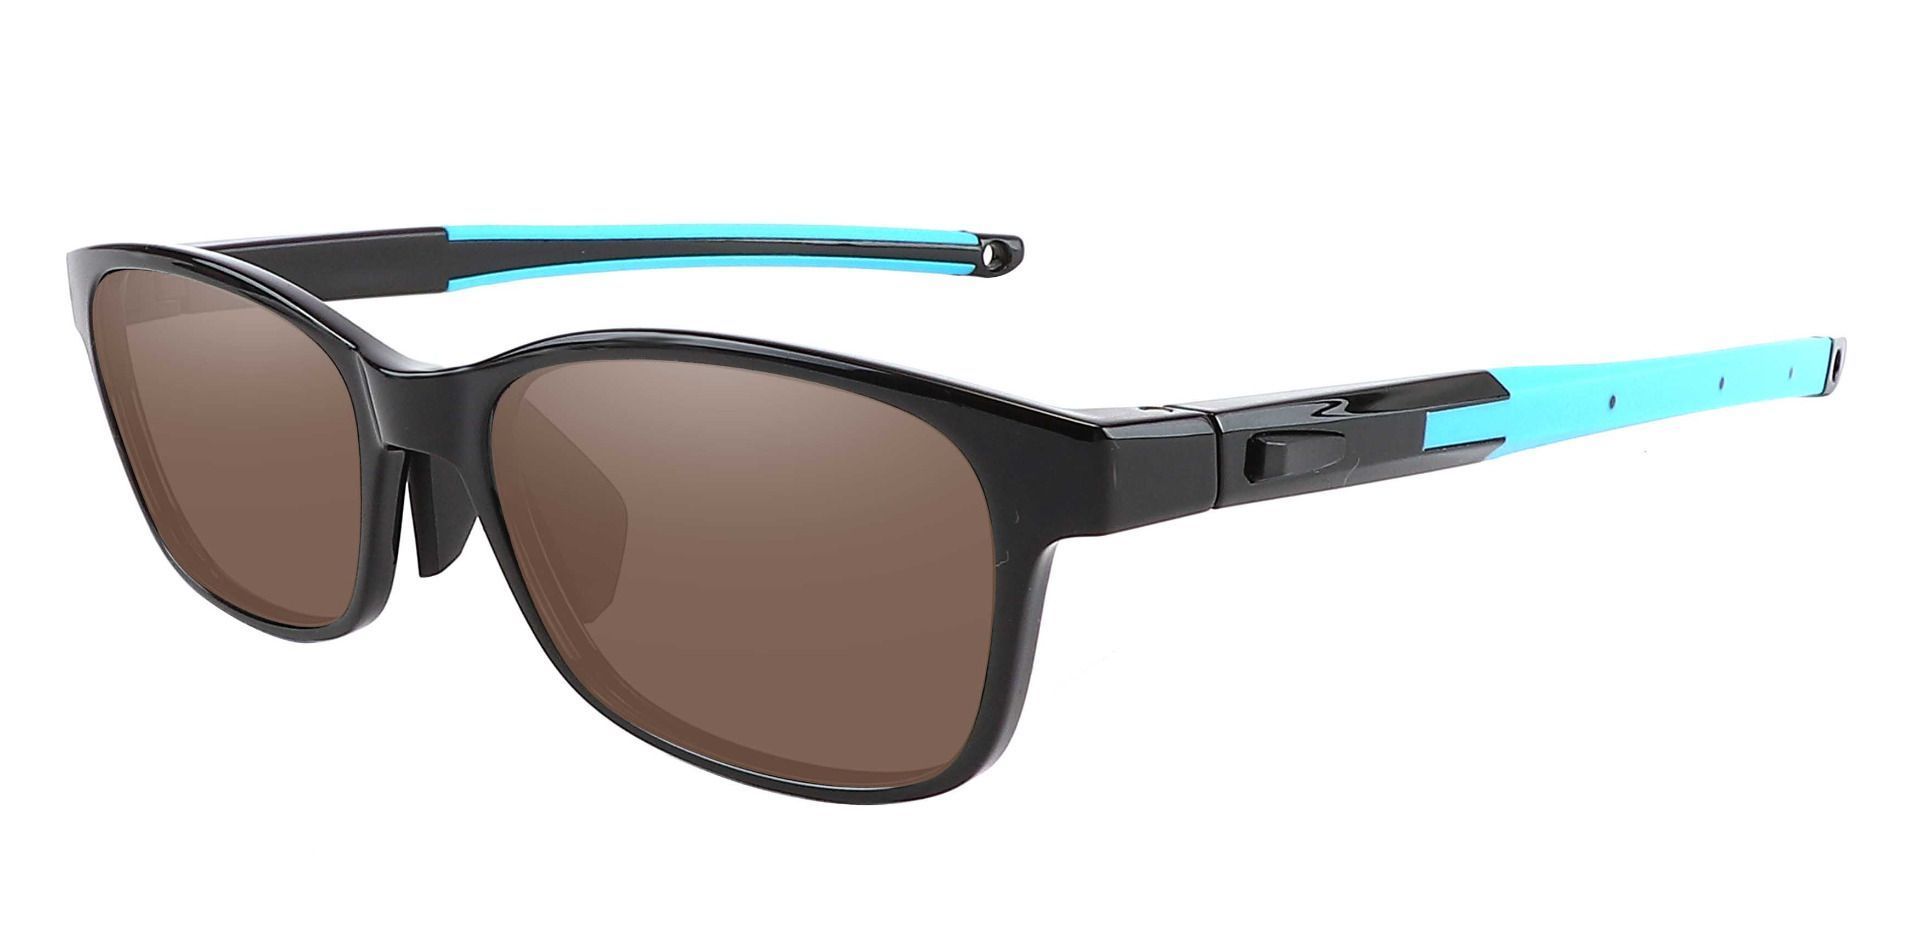 Higgins Rectangle Progressive Sunglasses - Black Frame With Brown Lenses